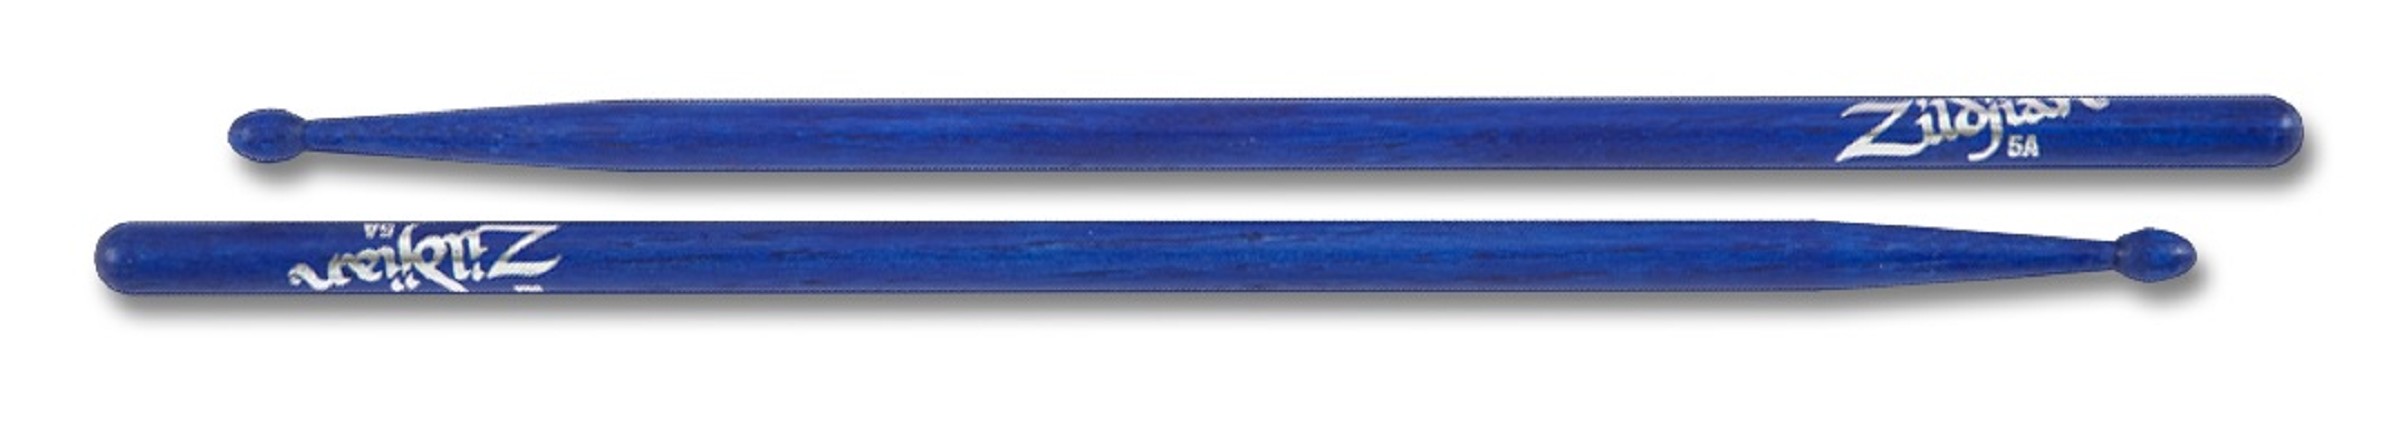 Zildjian Sticks Hickory 5A Blue Wood Tip 5AWBU